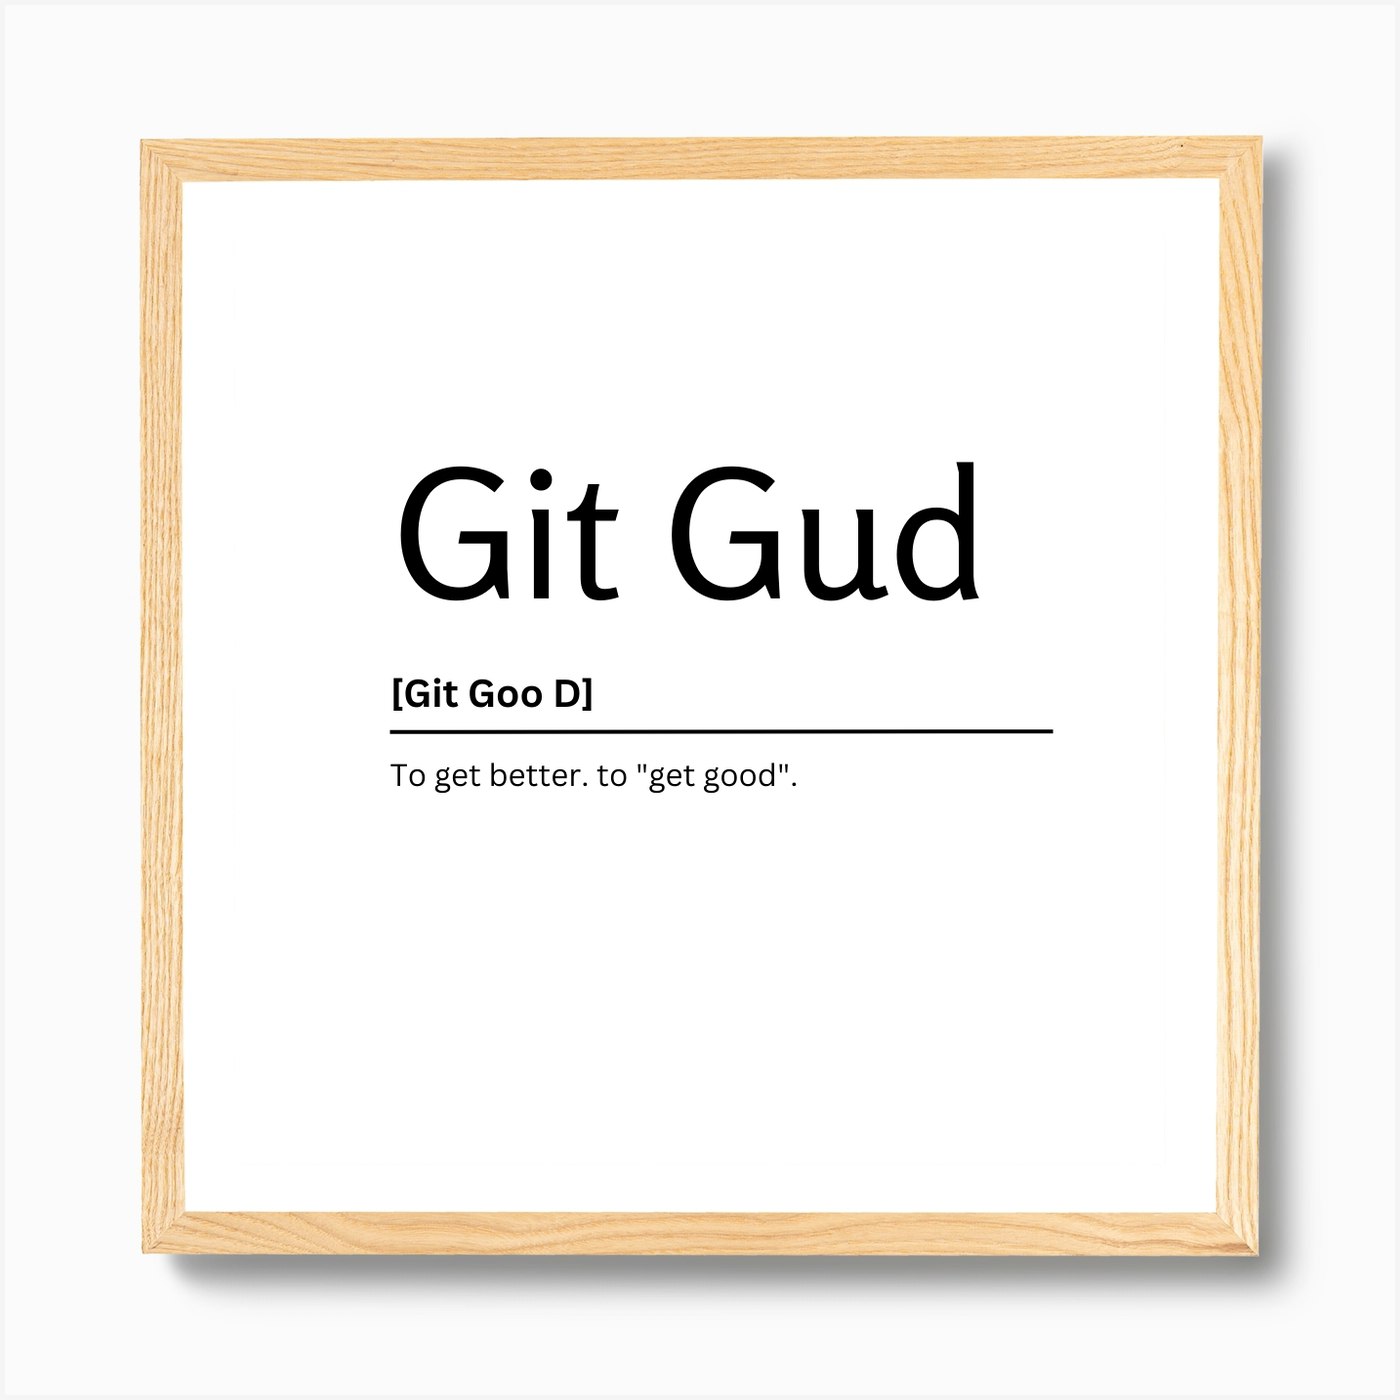 Git Gud: Trending Images Gallery